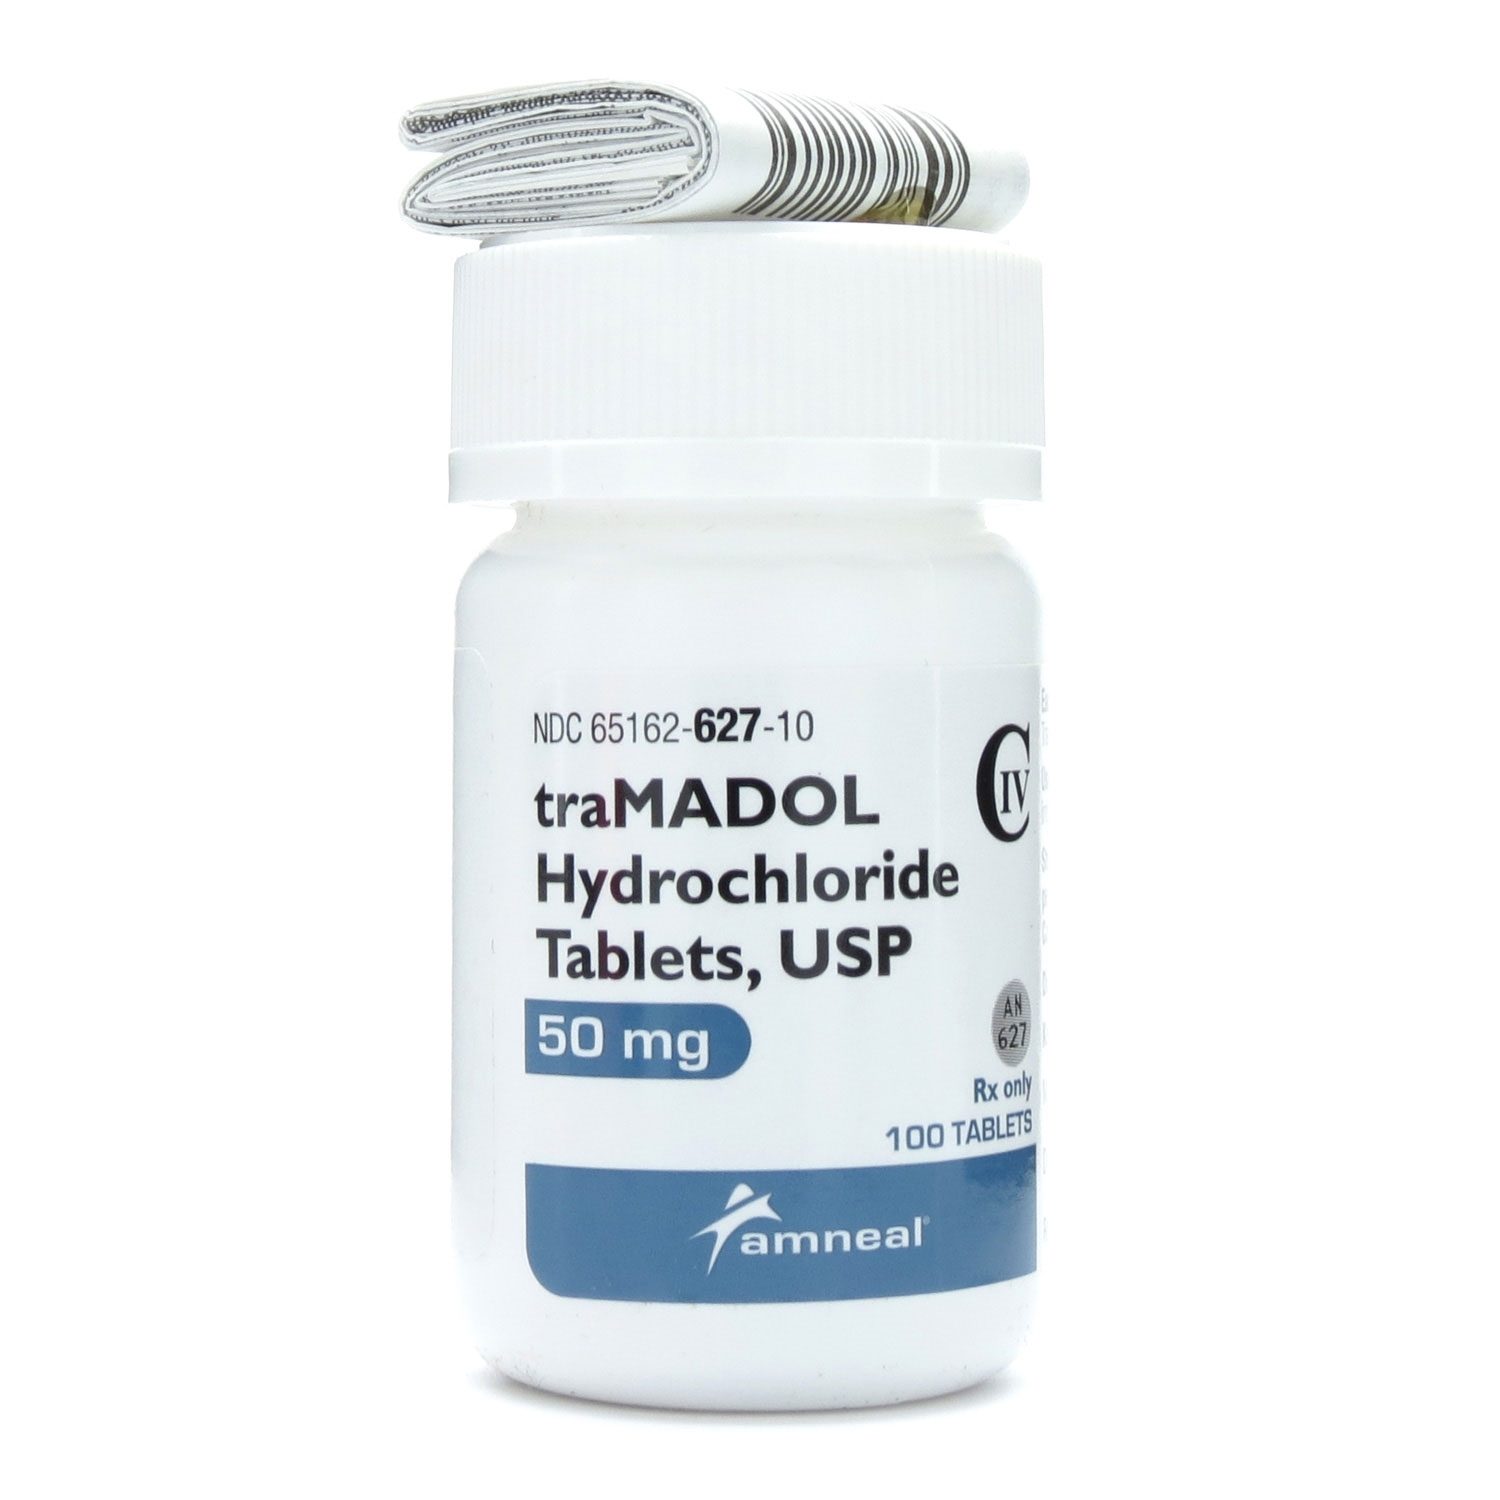 tramadol tablets